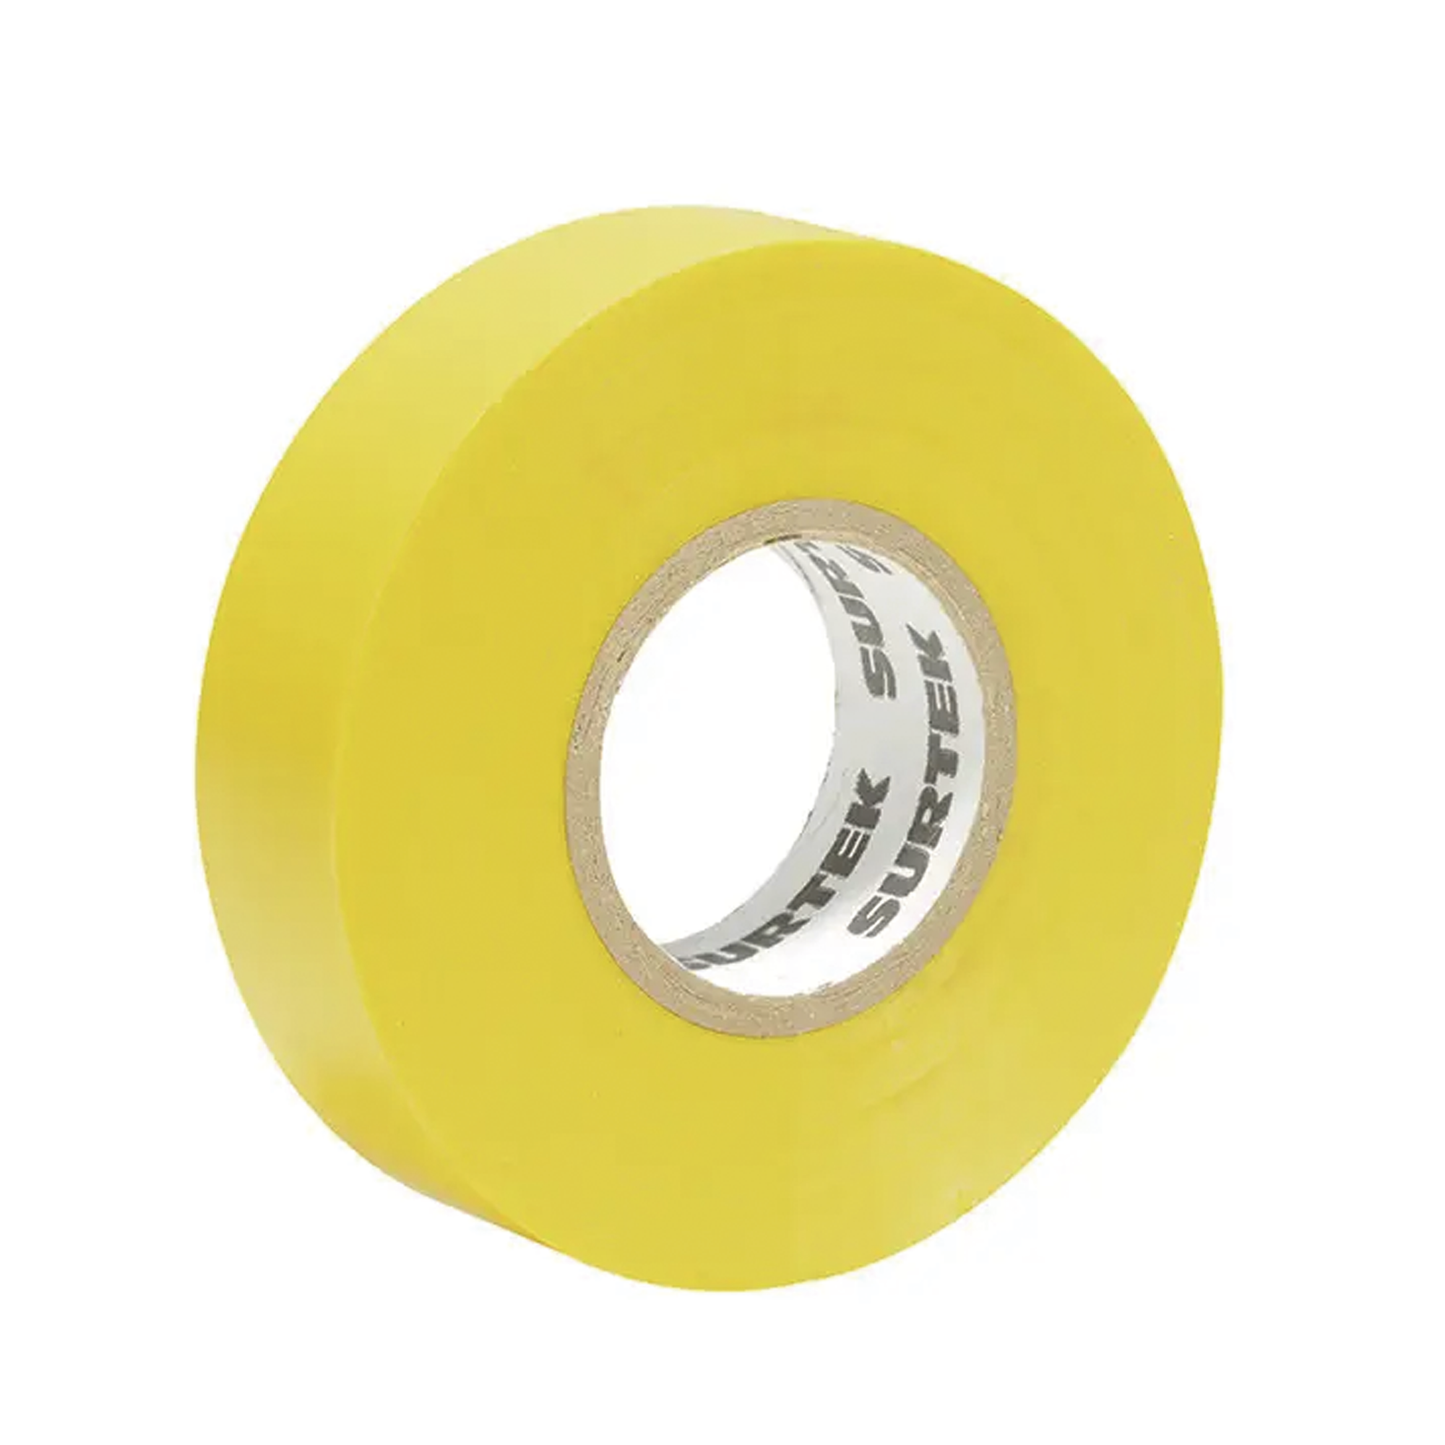 Cinta para aislar color Amarilla de 19 mm x  18 metros / Fabricada en PVC / Adhesivo acrílico.